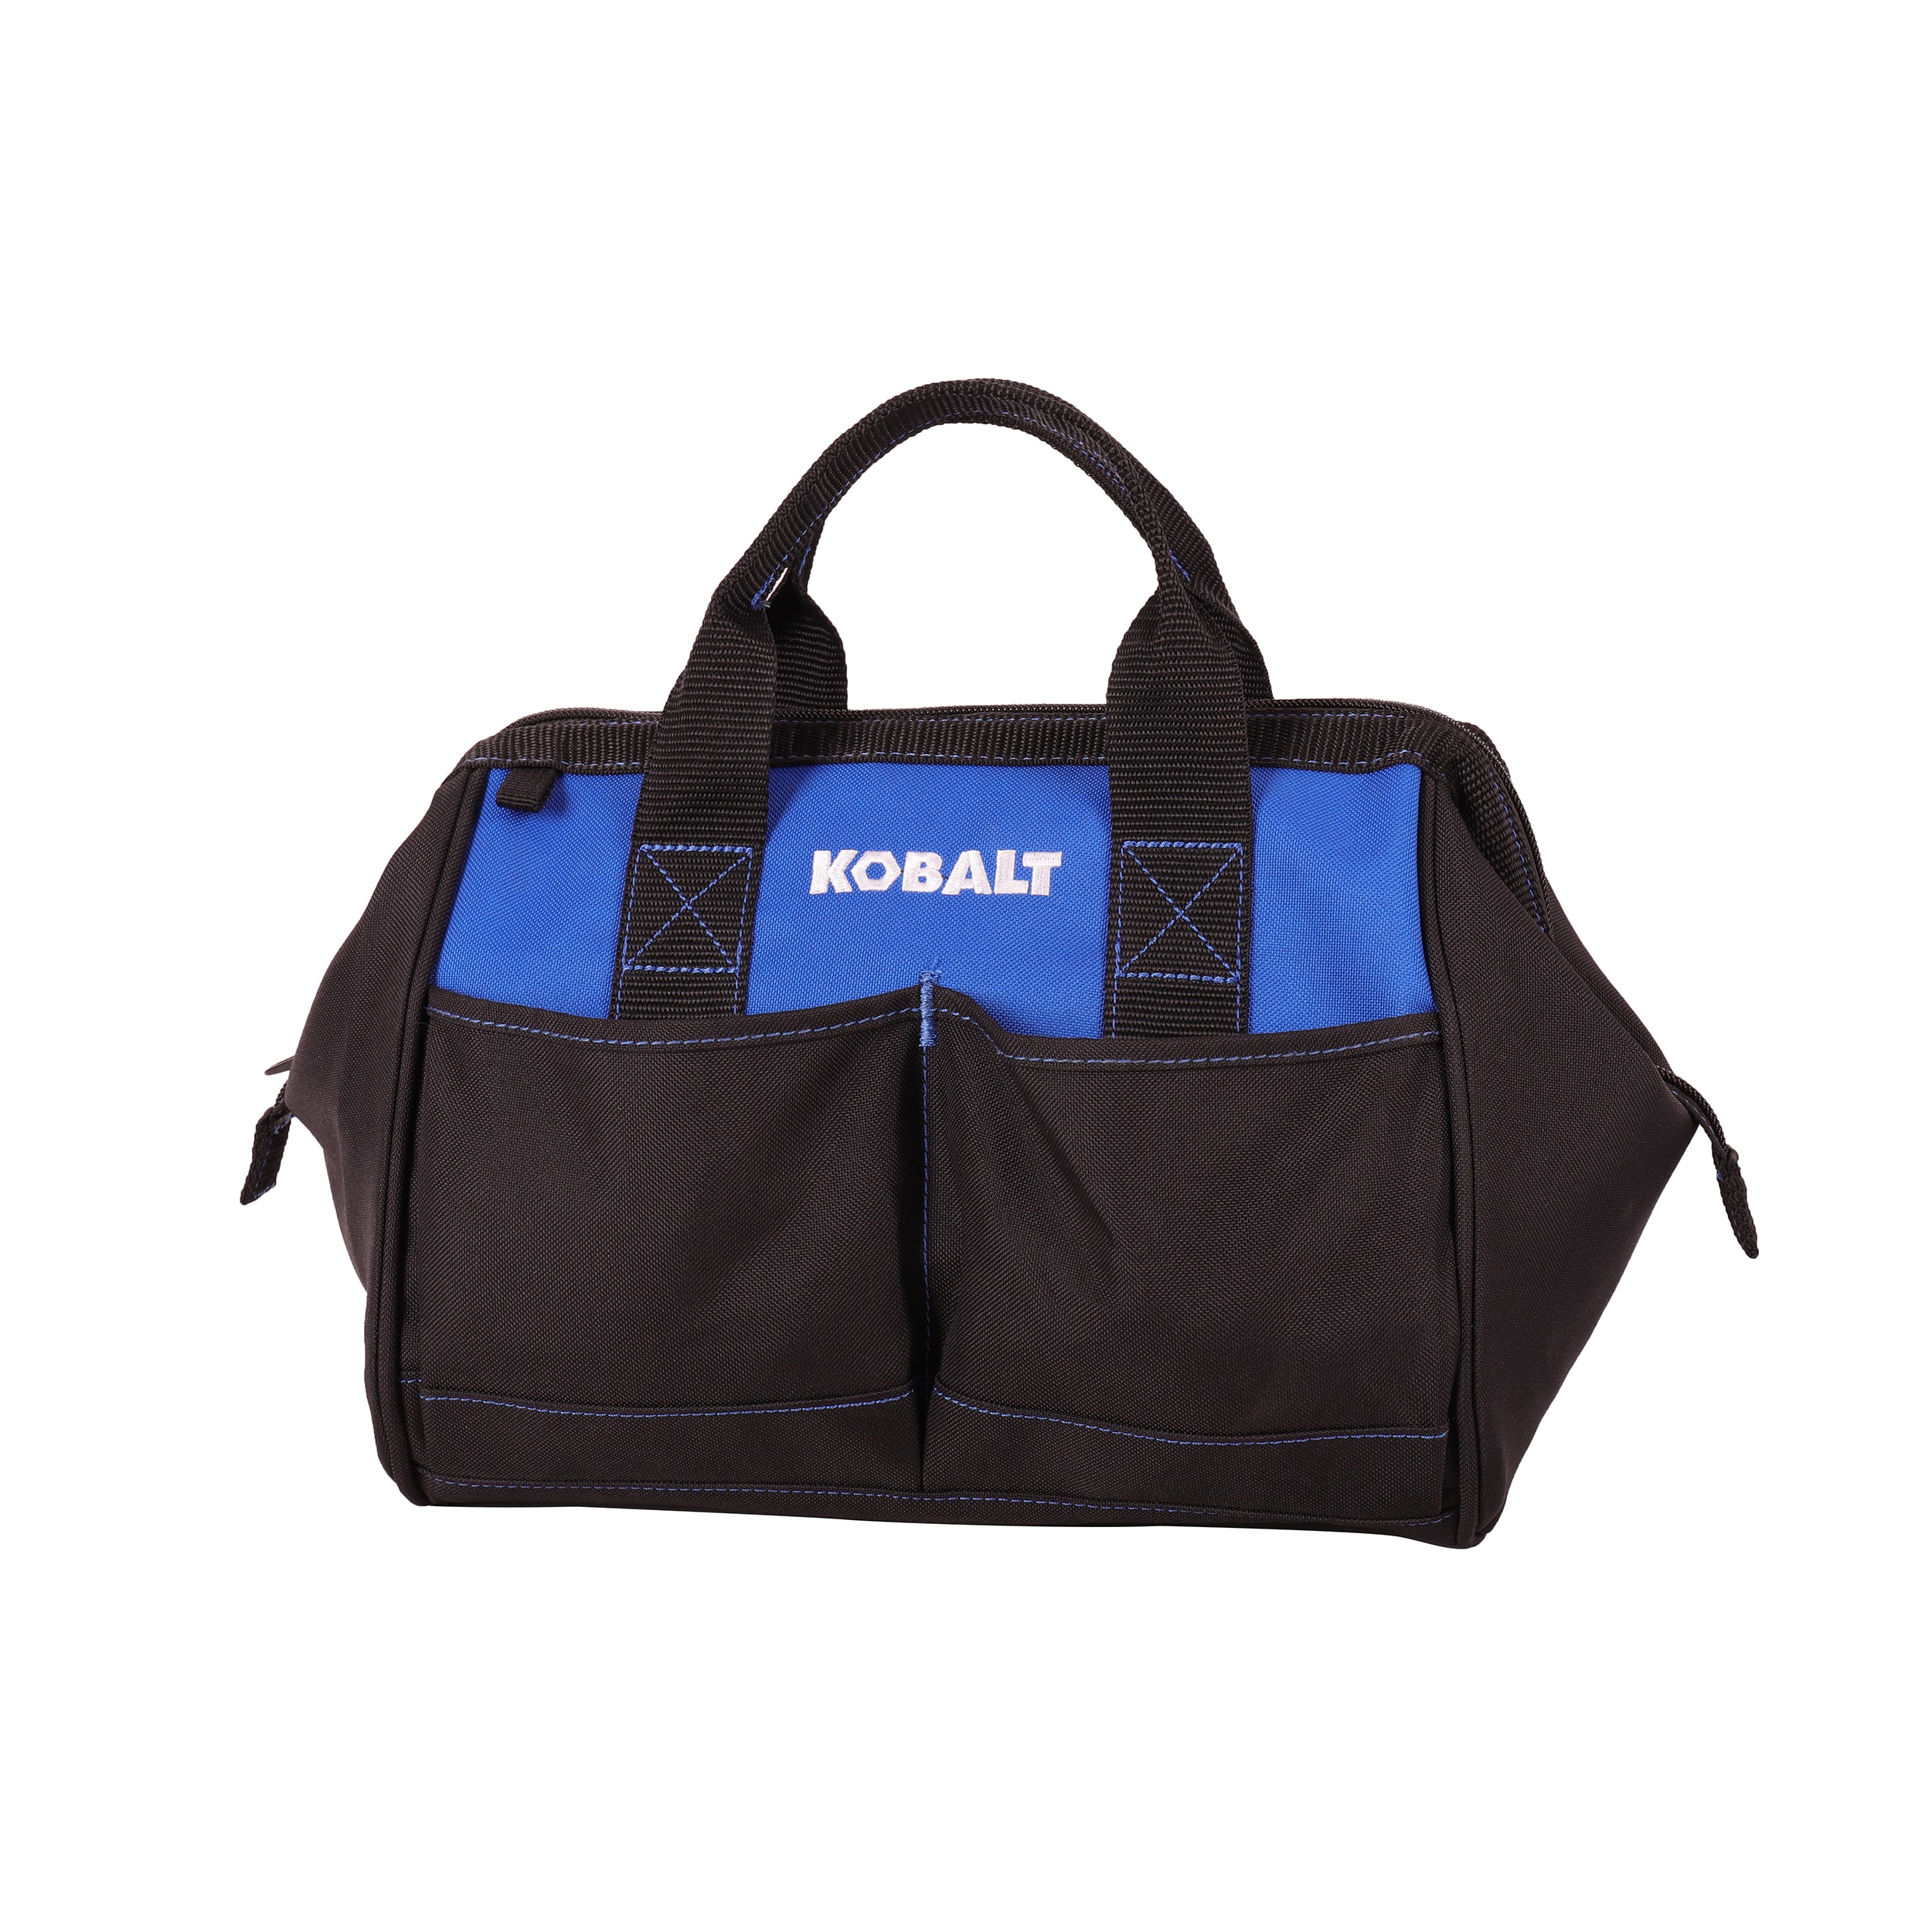 Kobalt Blue Black Polyester 12-in Tool Bag $7.98 @lowes